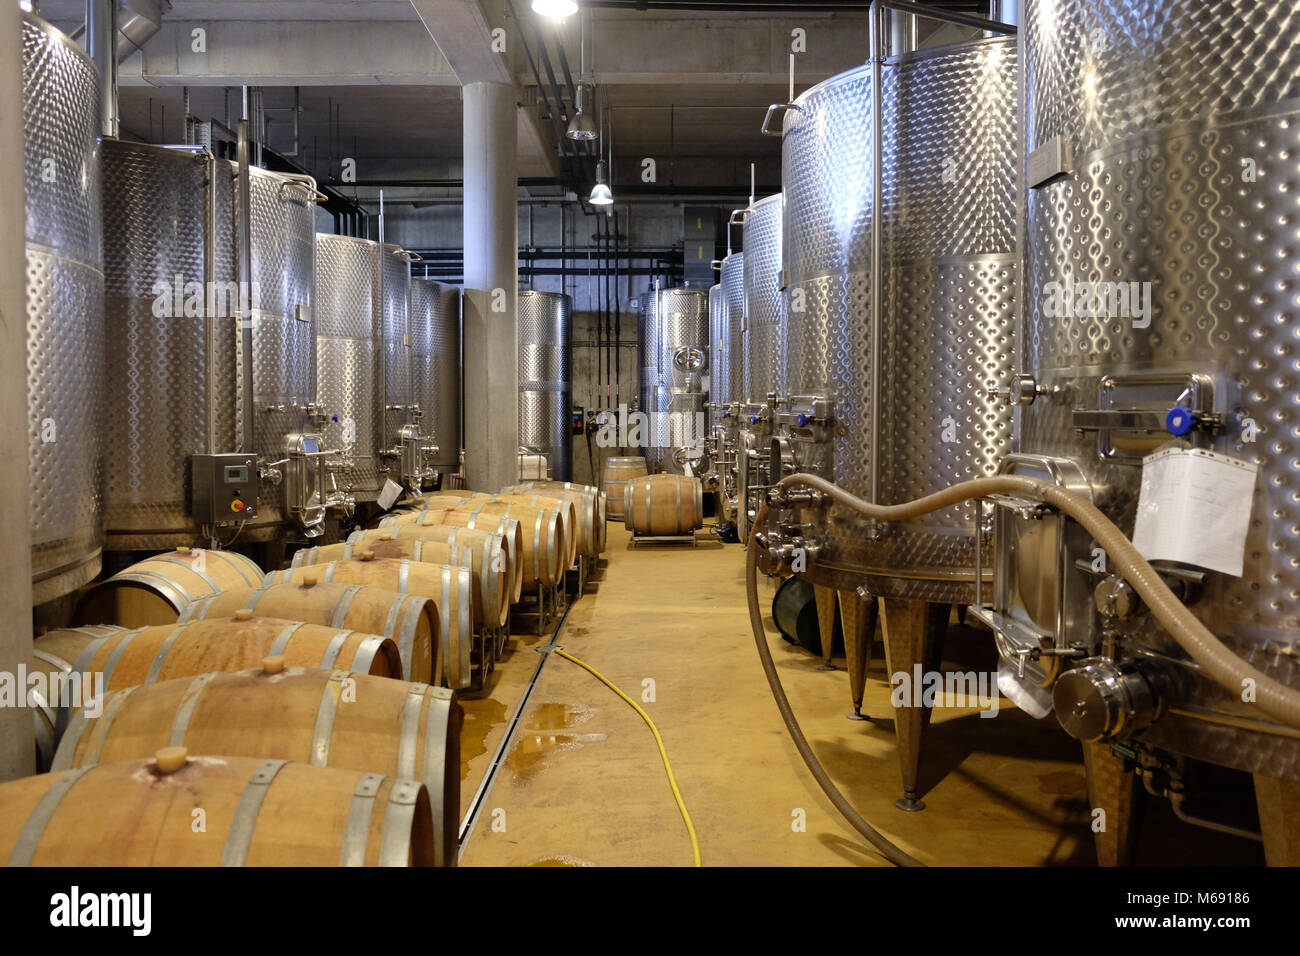 Interior of a modern underground winery with aluminium tanks and wine barrels Stock Photo